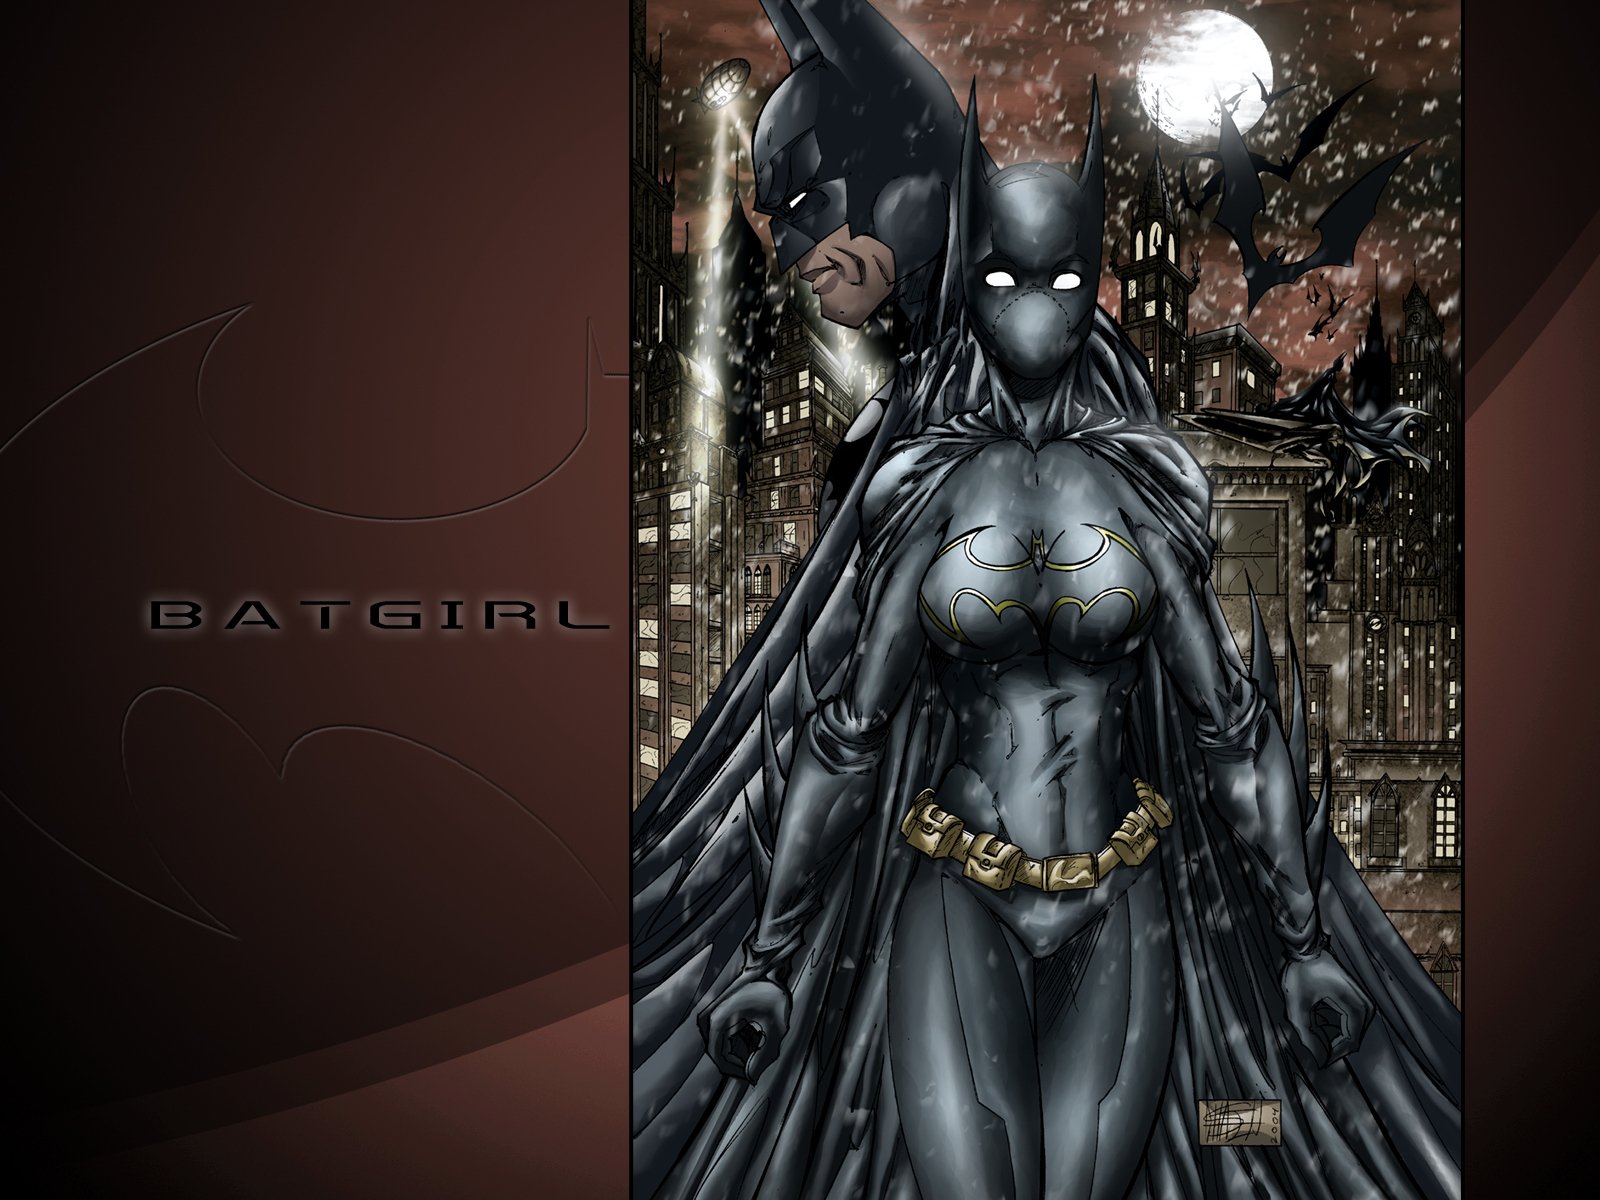 Gotham Girls image Batgirl Fan Art HD wallpaper and background